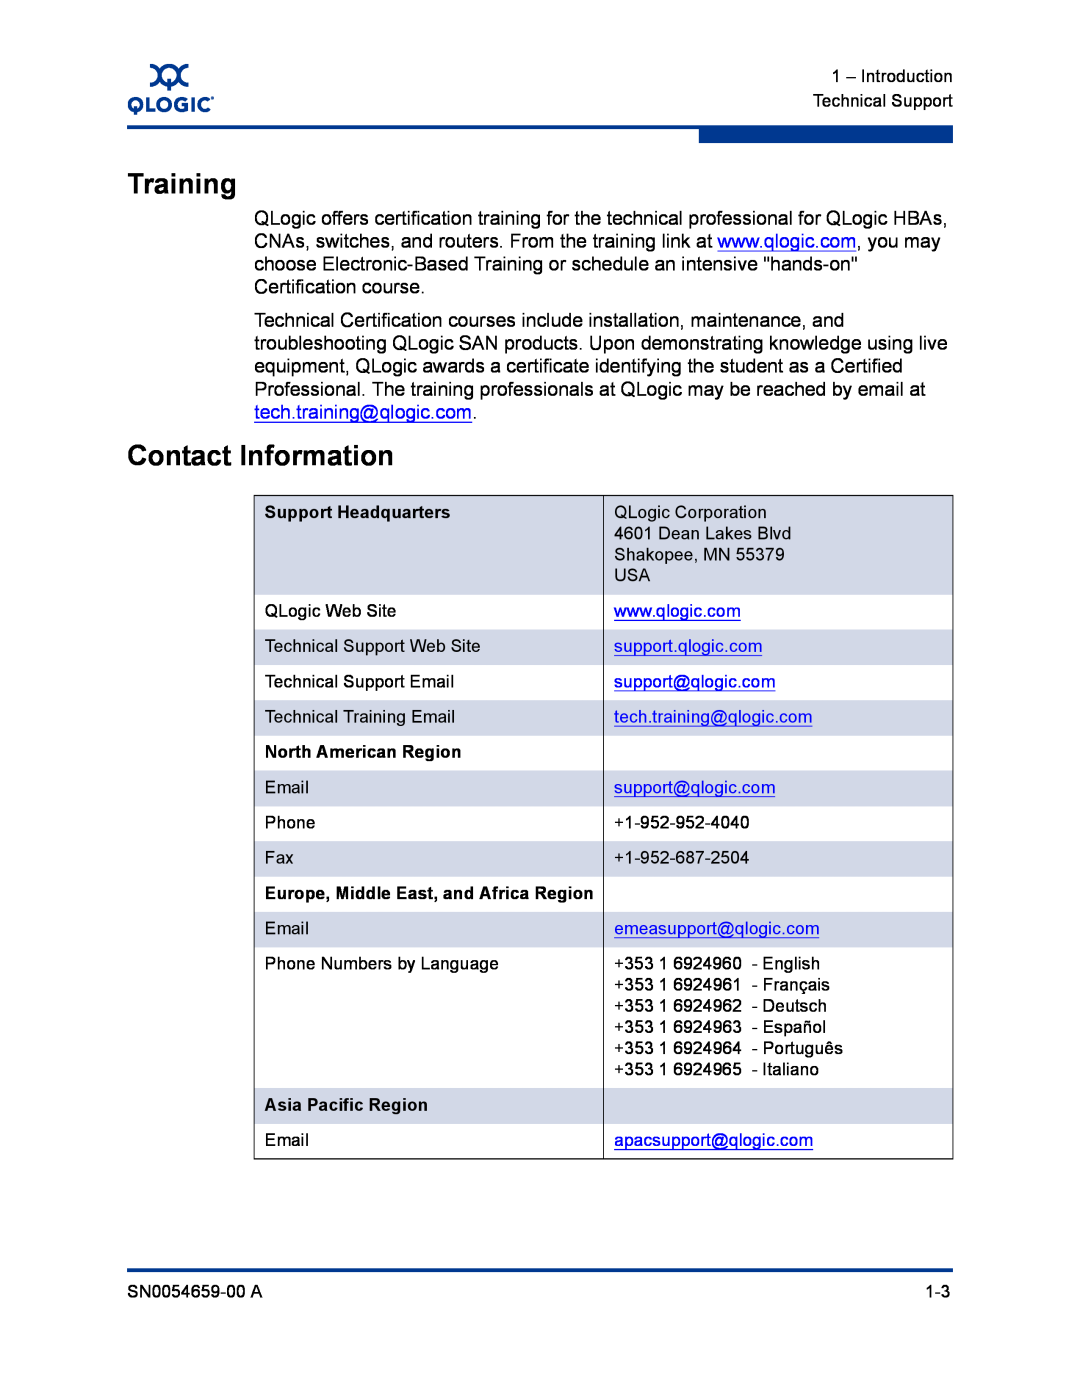 Q-Logic ISR6142 manual Training, Contact Information 